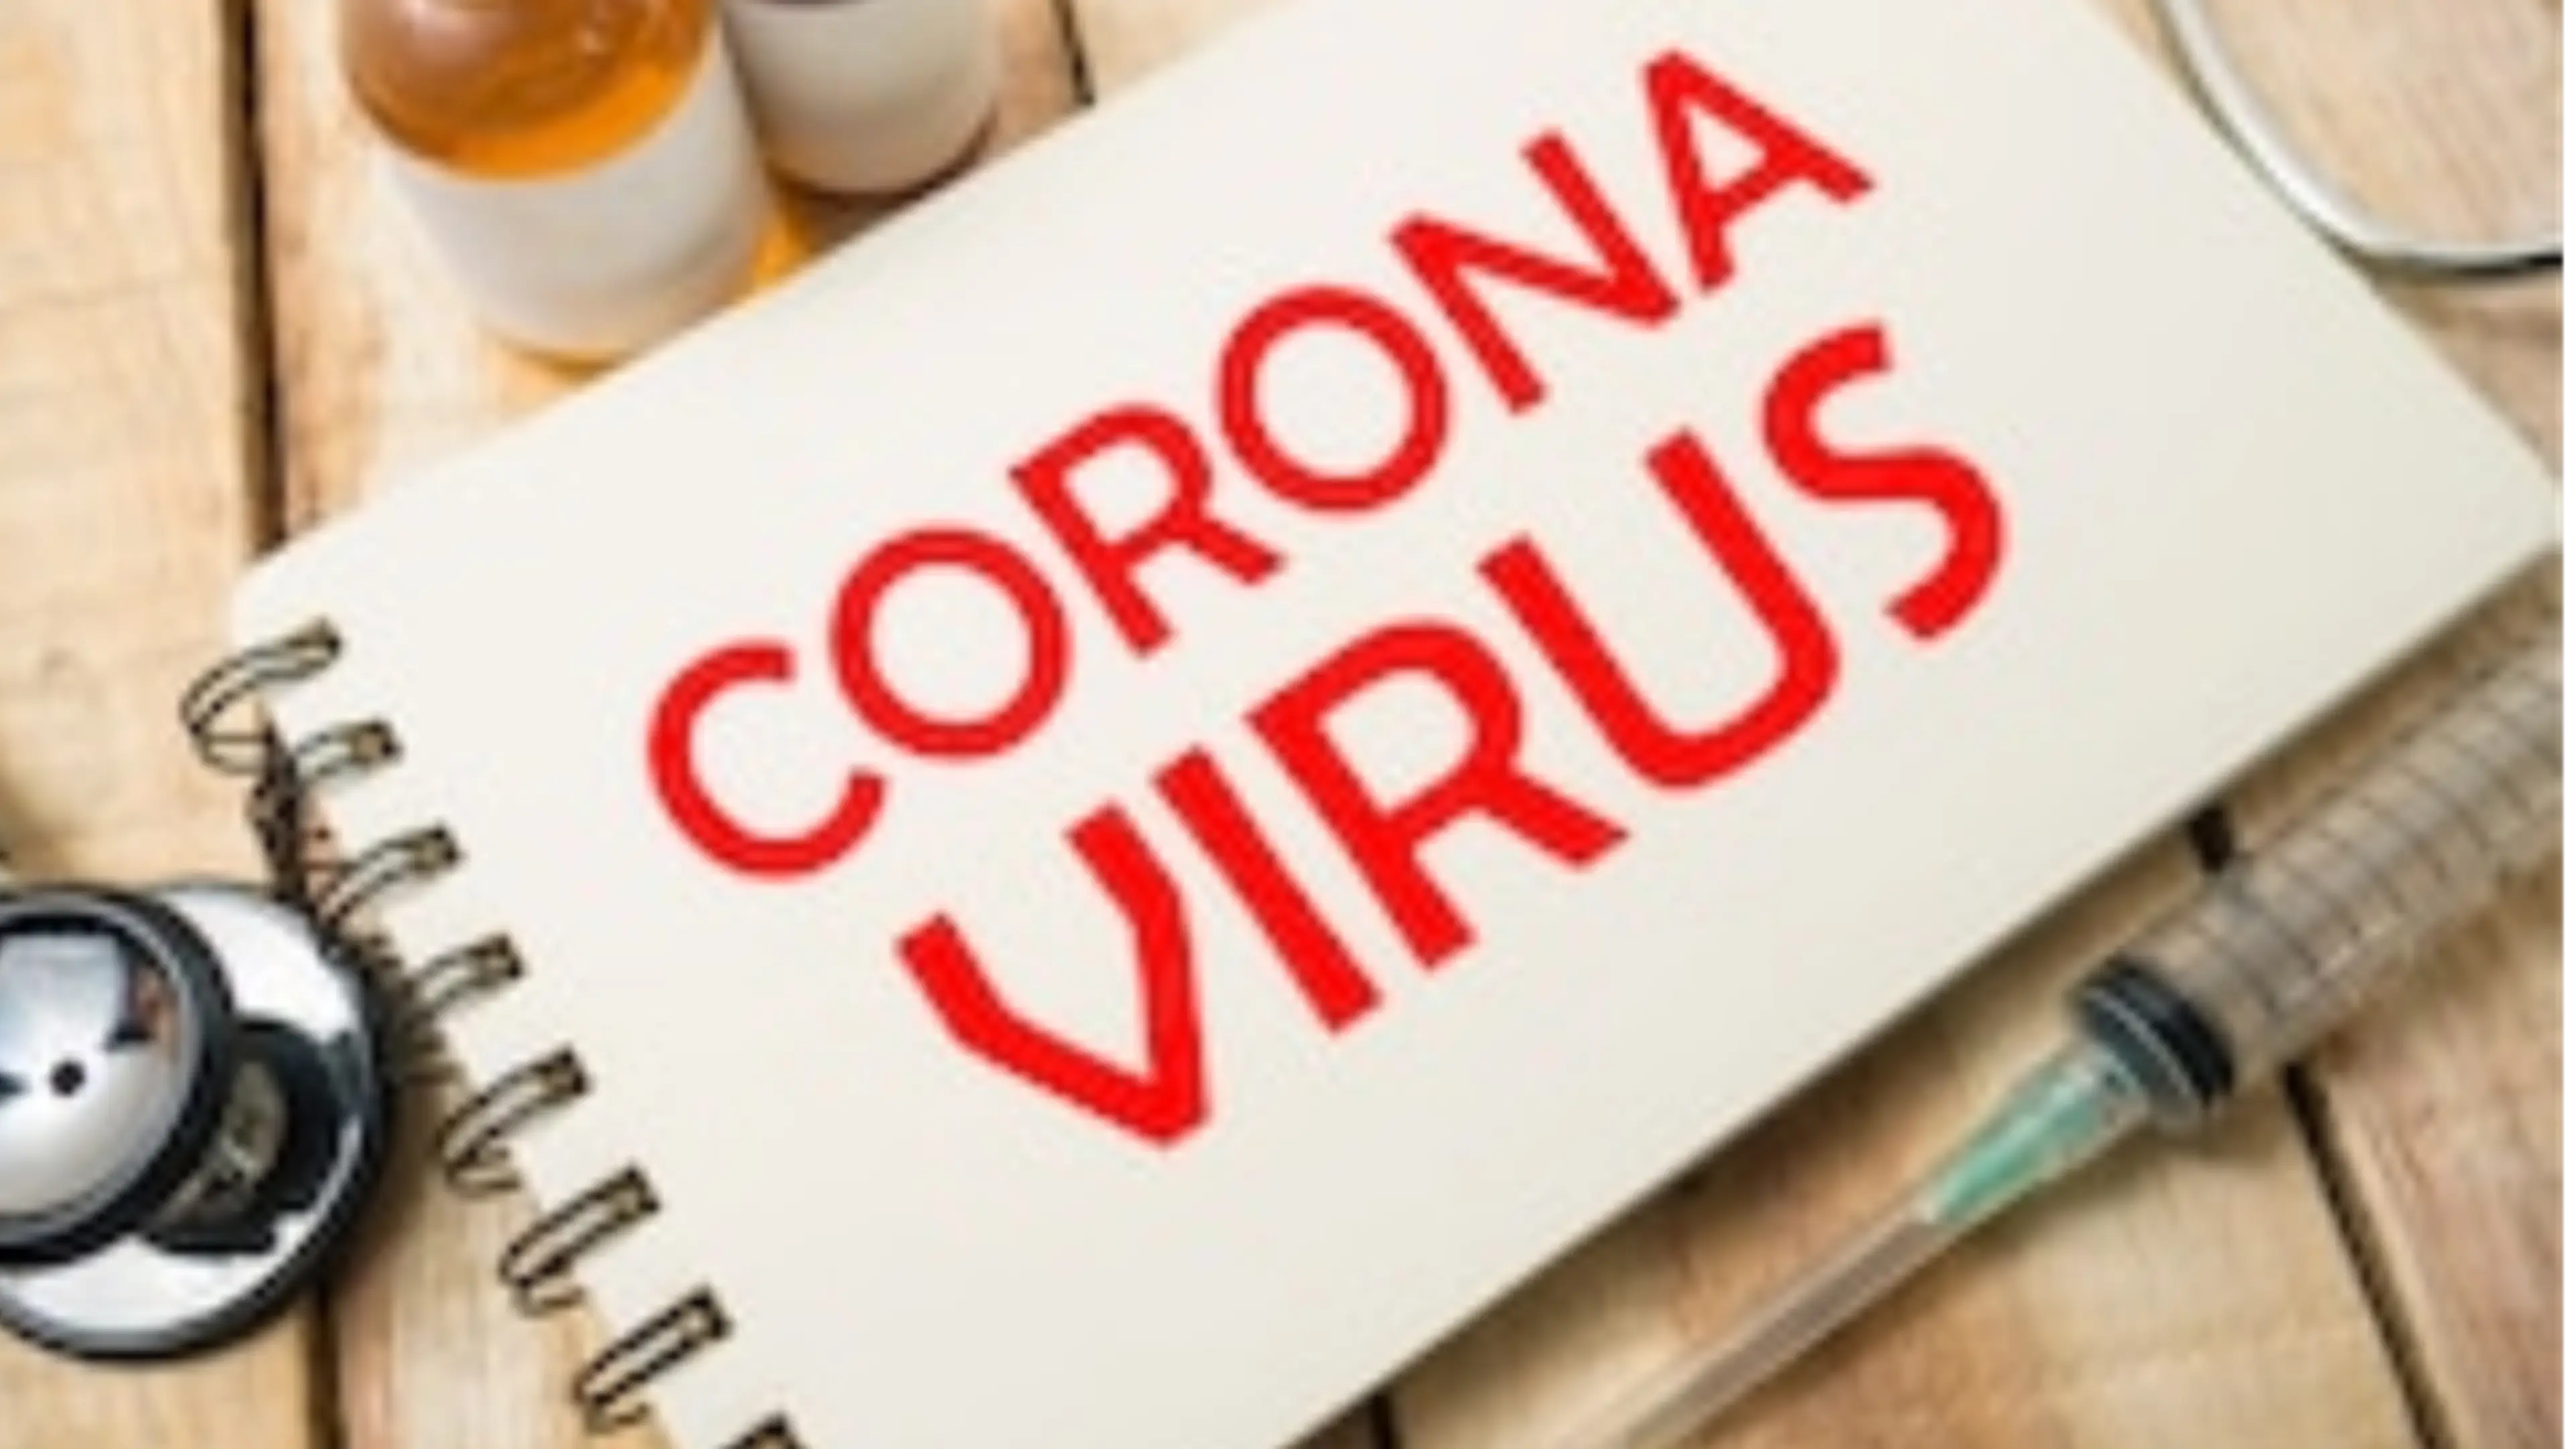 Coronavirus: COVID-19 updates for March 22
